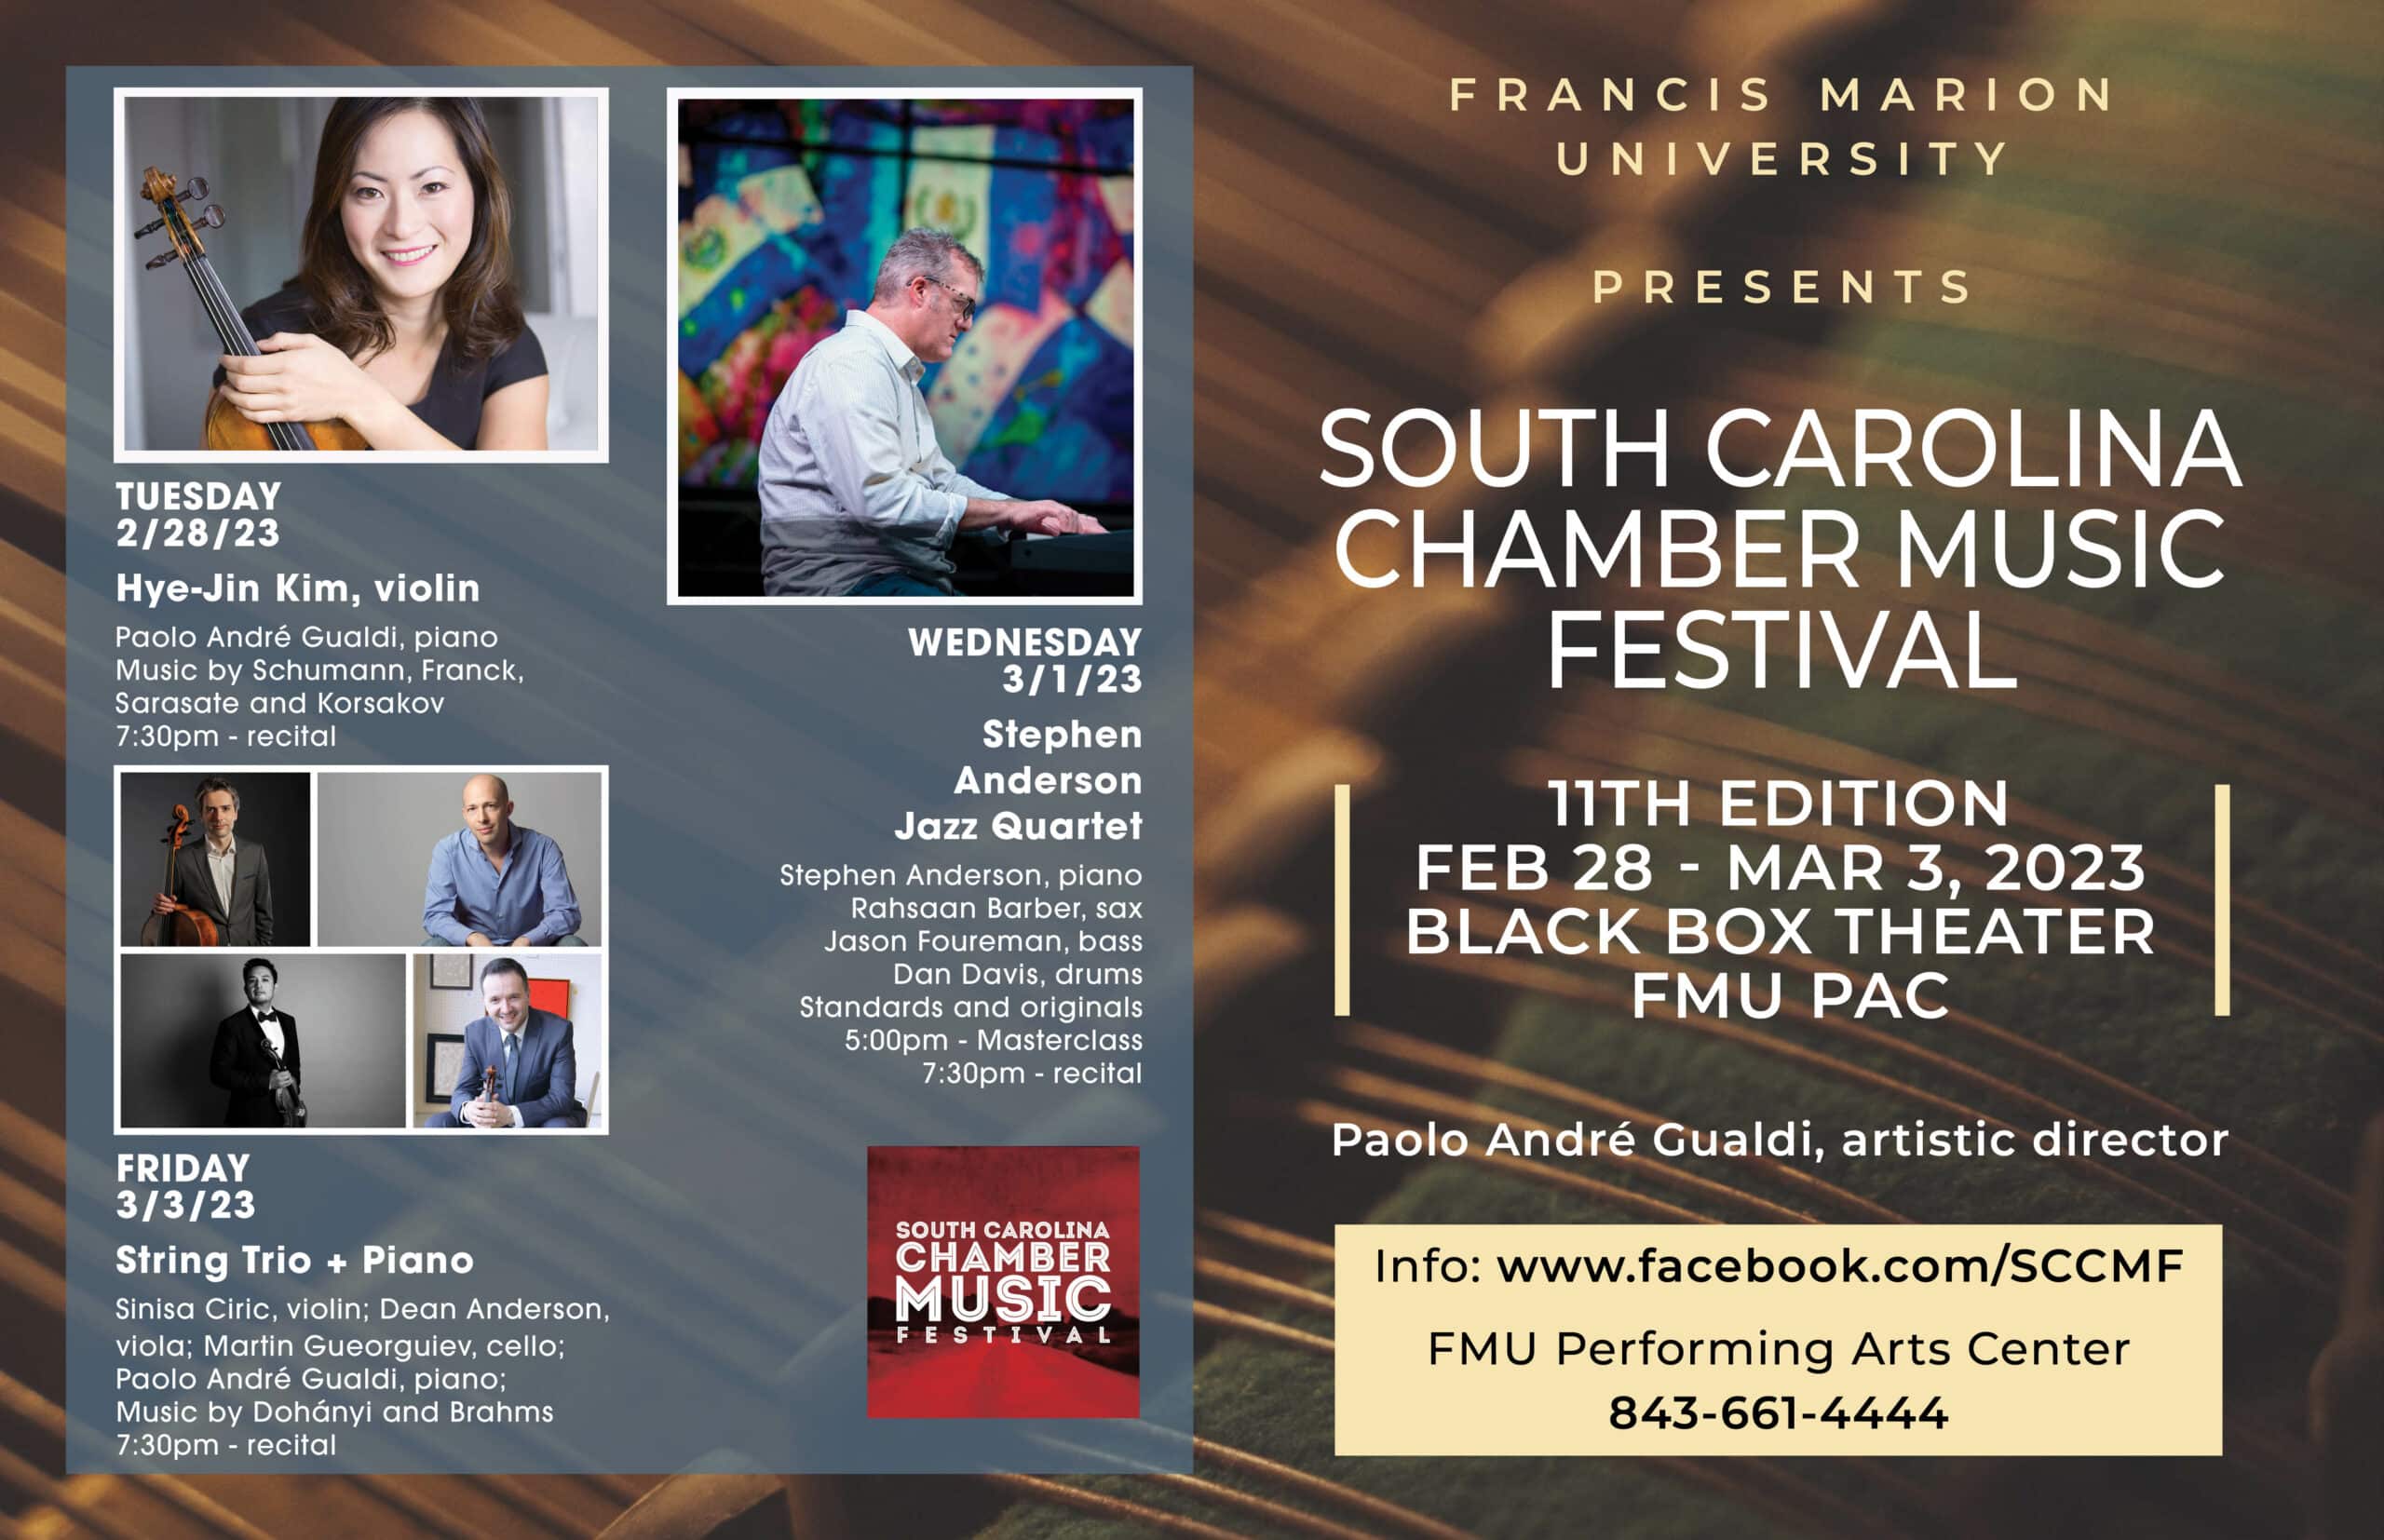 FMU’s South Carolina Chamber Music Festival returns February 28